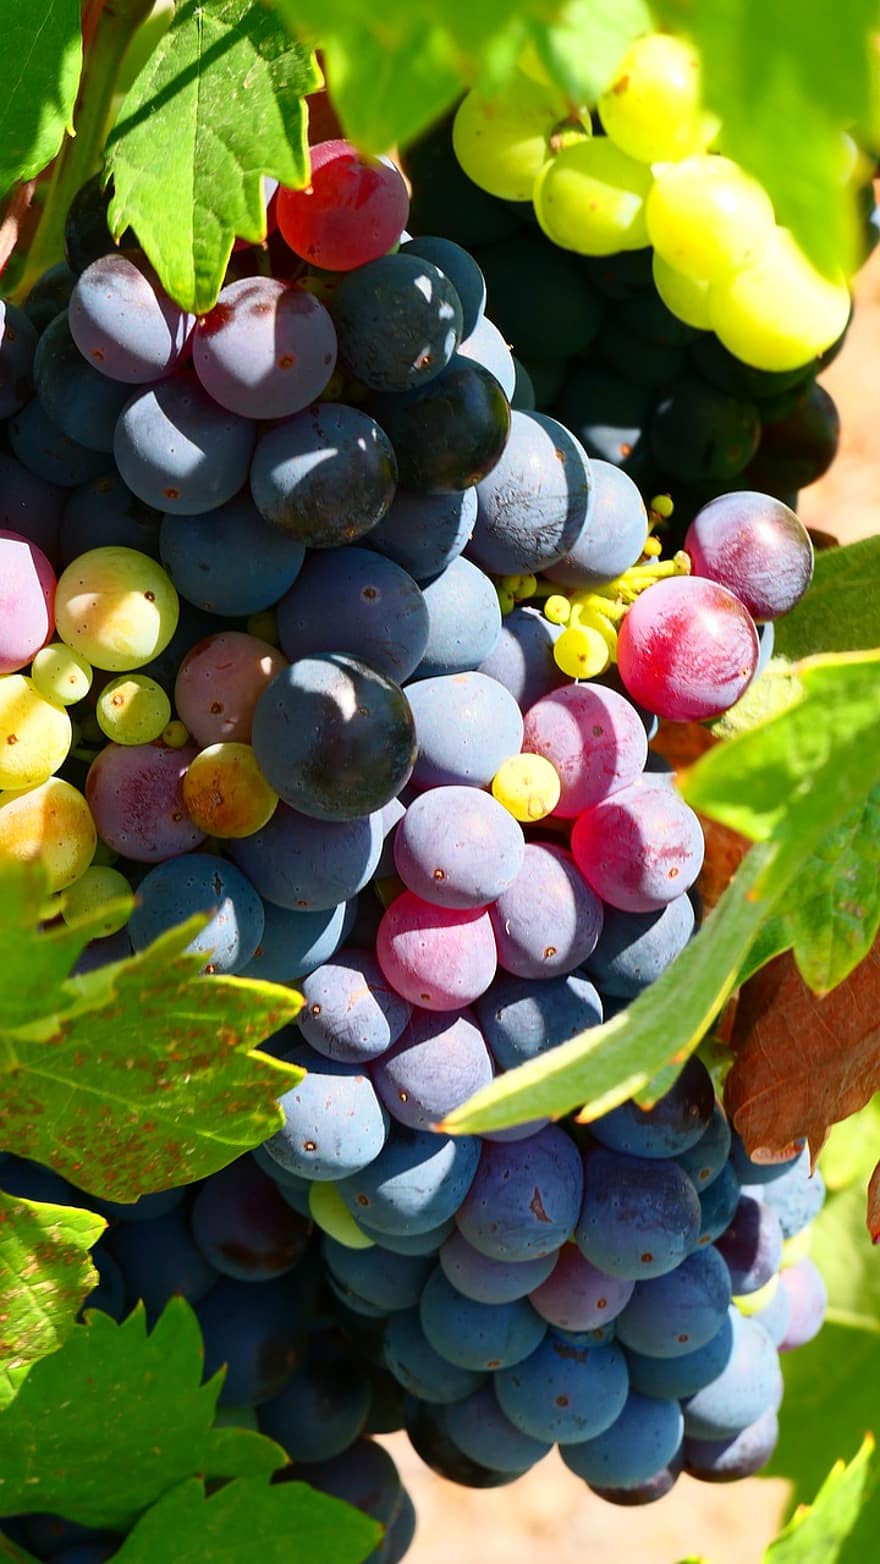 Fruit, Grapes, Vines, Leaves, Healthy